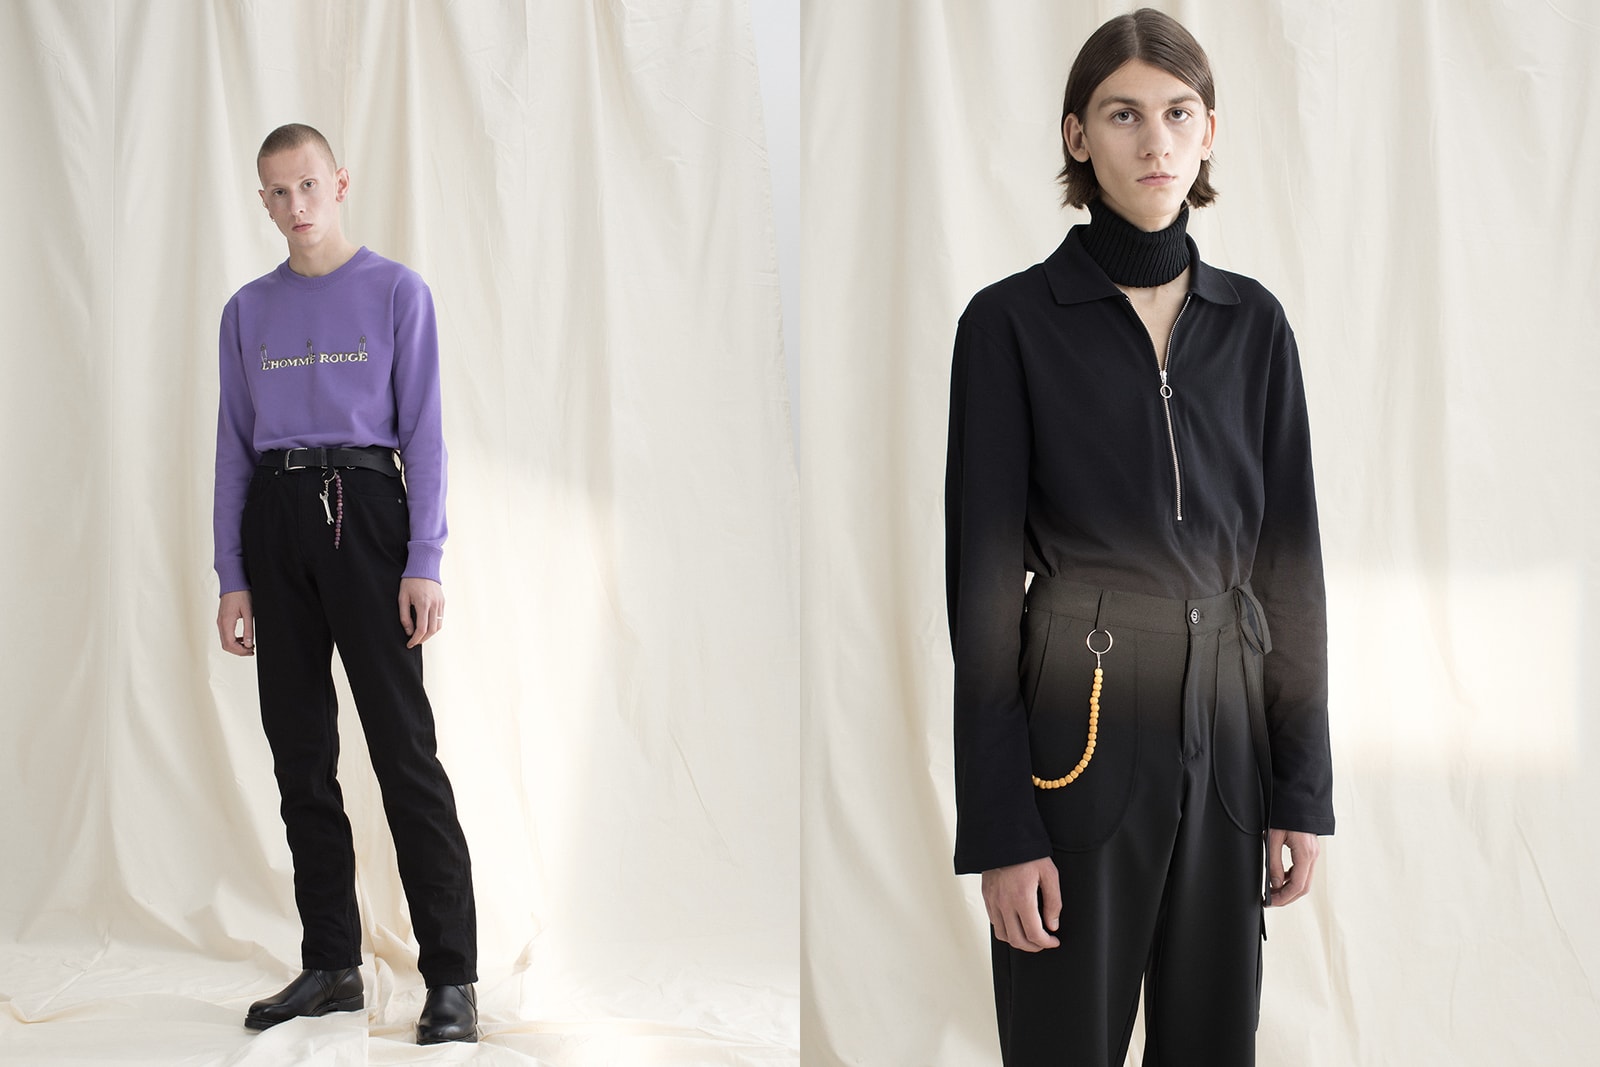 L'HOMME ROUGE interview brand introduction Sweden Scandinavia minimalism